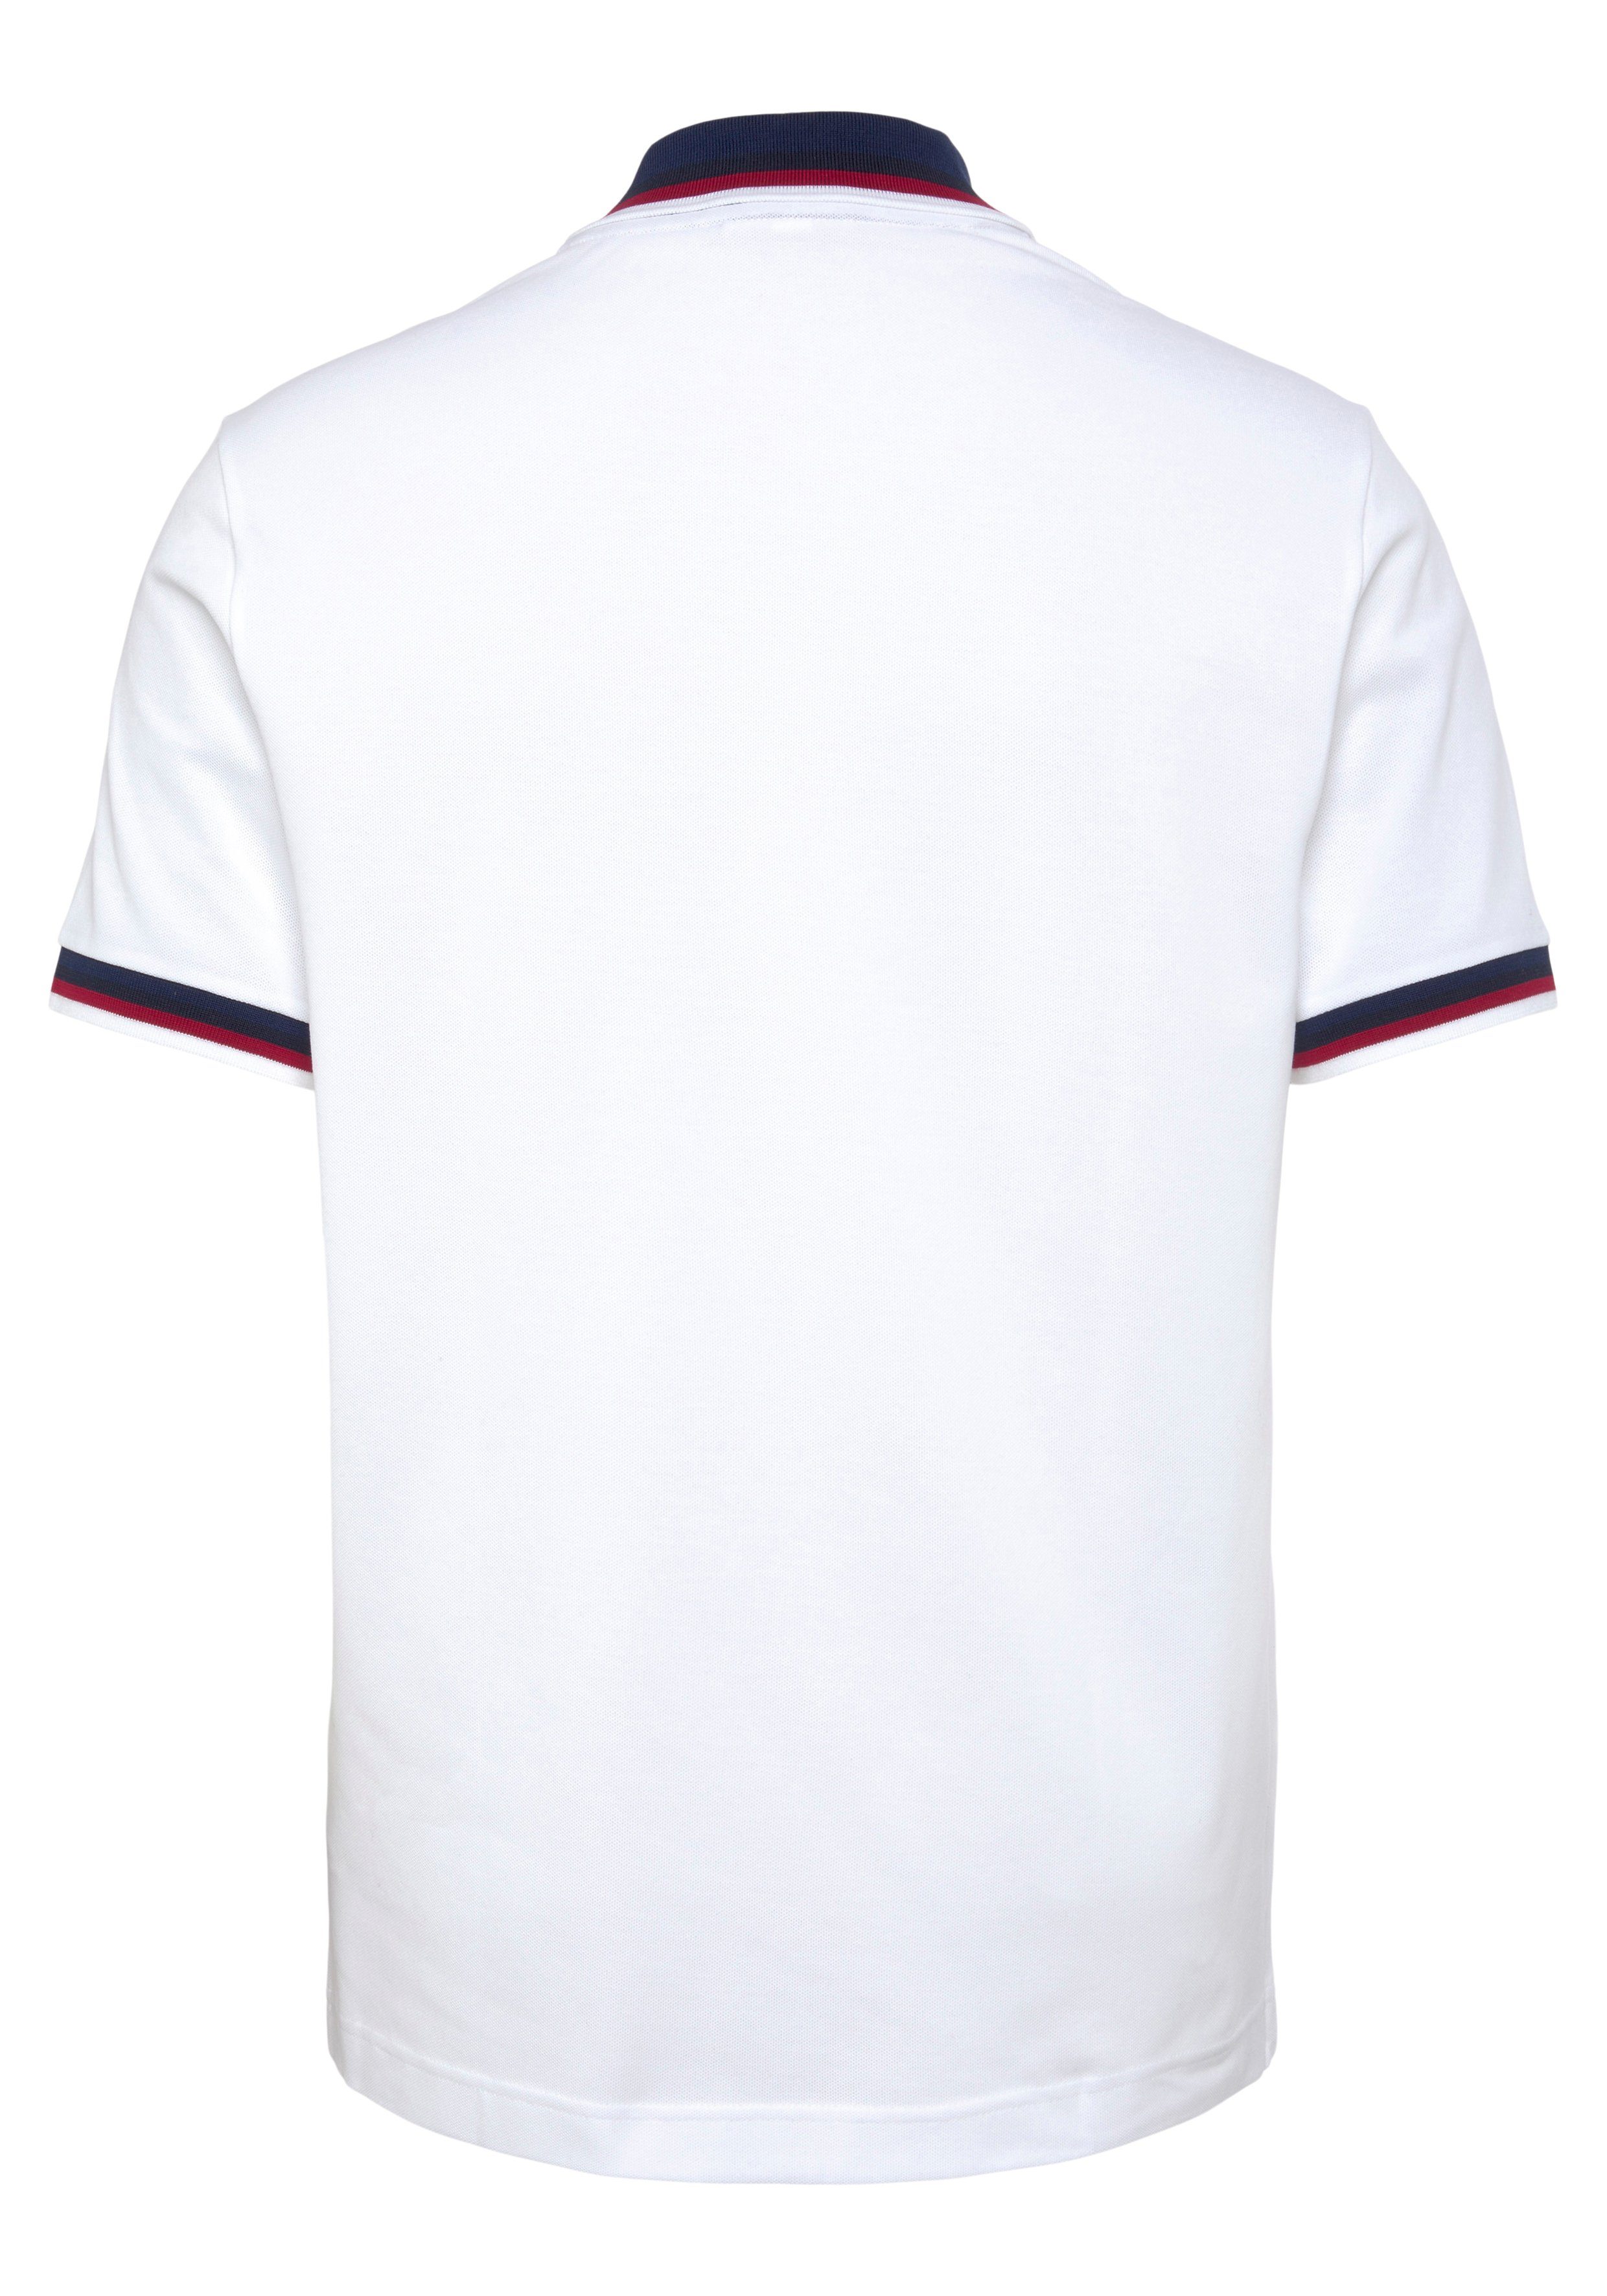 Lacoste auf WHITE der Lacoste mit Brust POLO Logo Poloshirt